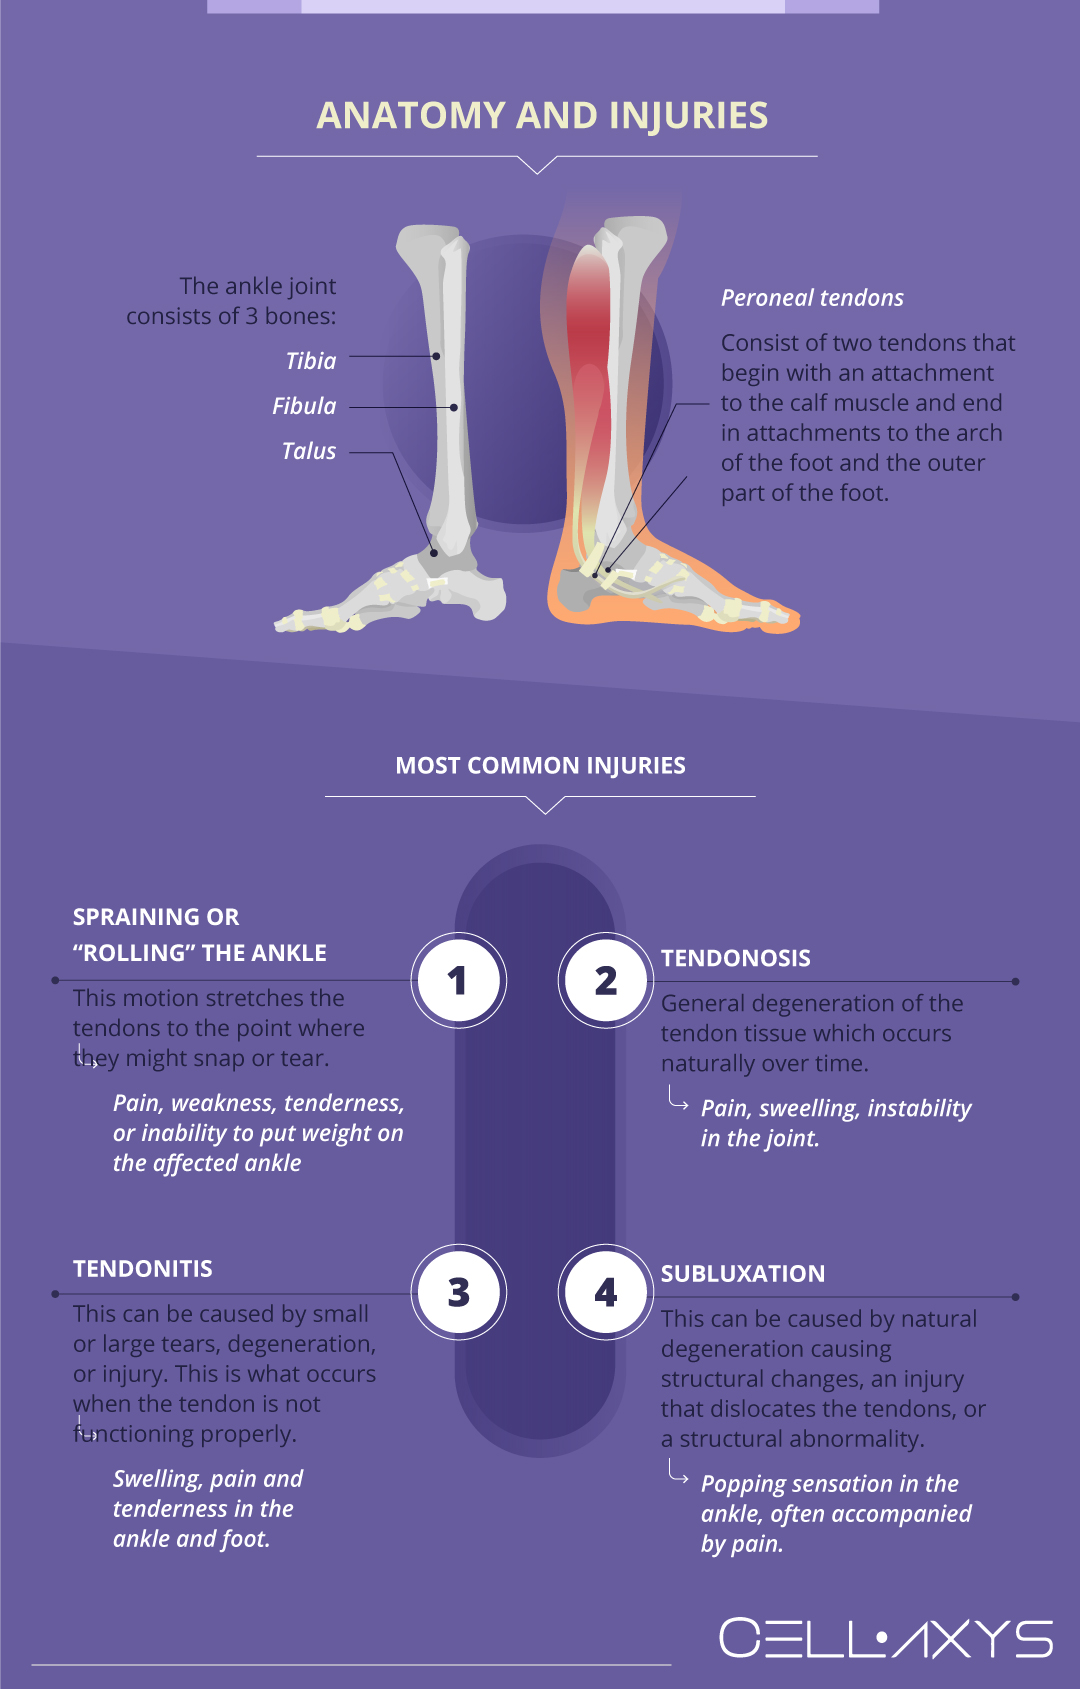 Anatomy and Injuries